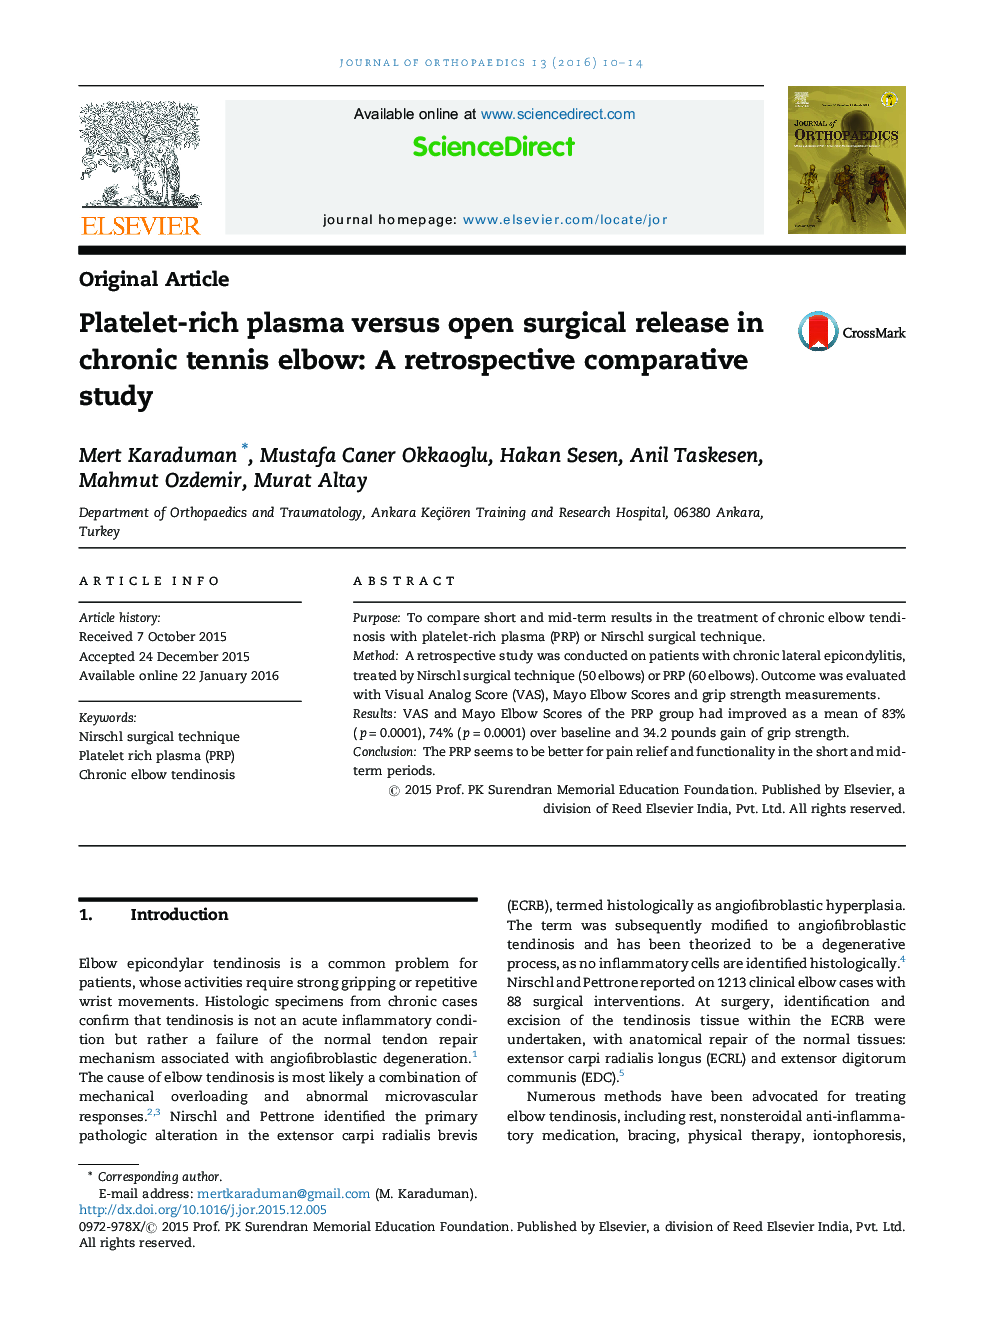 Platelet-rich plasma versus open surgical release in chronic tennis elbow: A retrospective comparative study